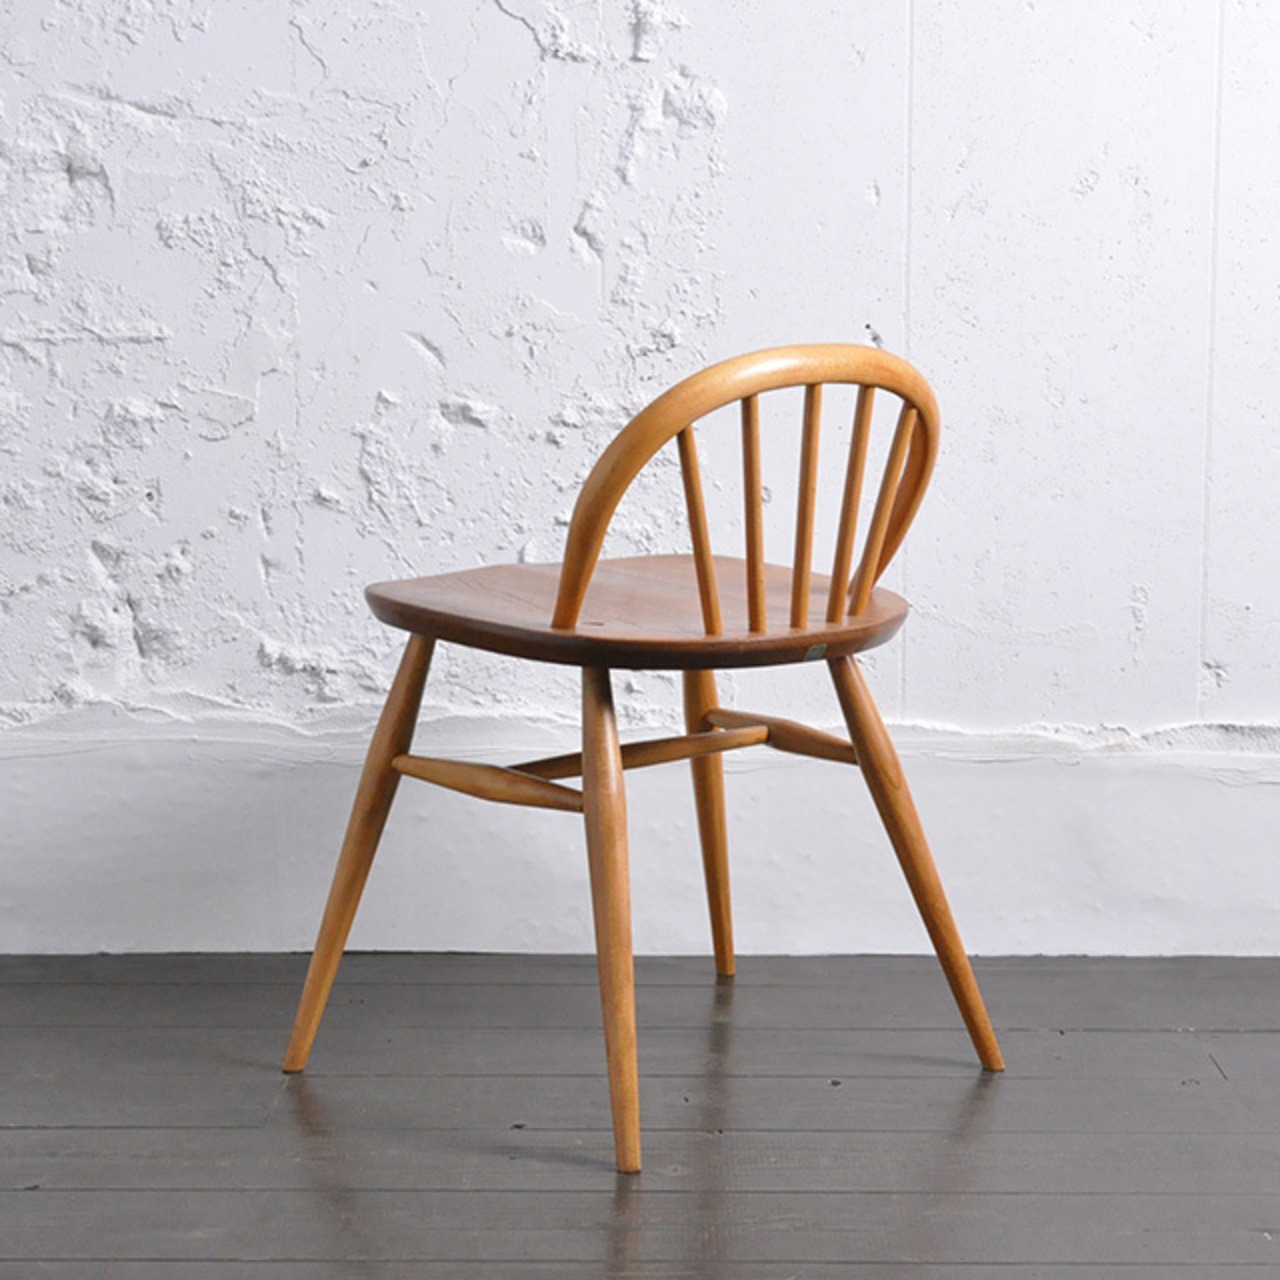 Ercol Dressing Chair / アーコール ドレッシング チェア / 1901-0011